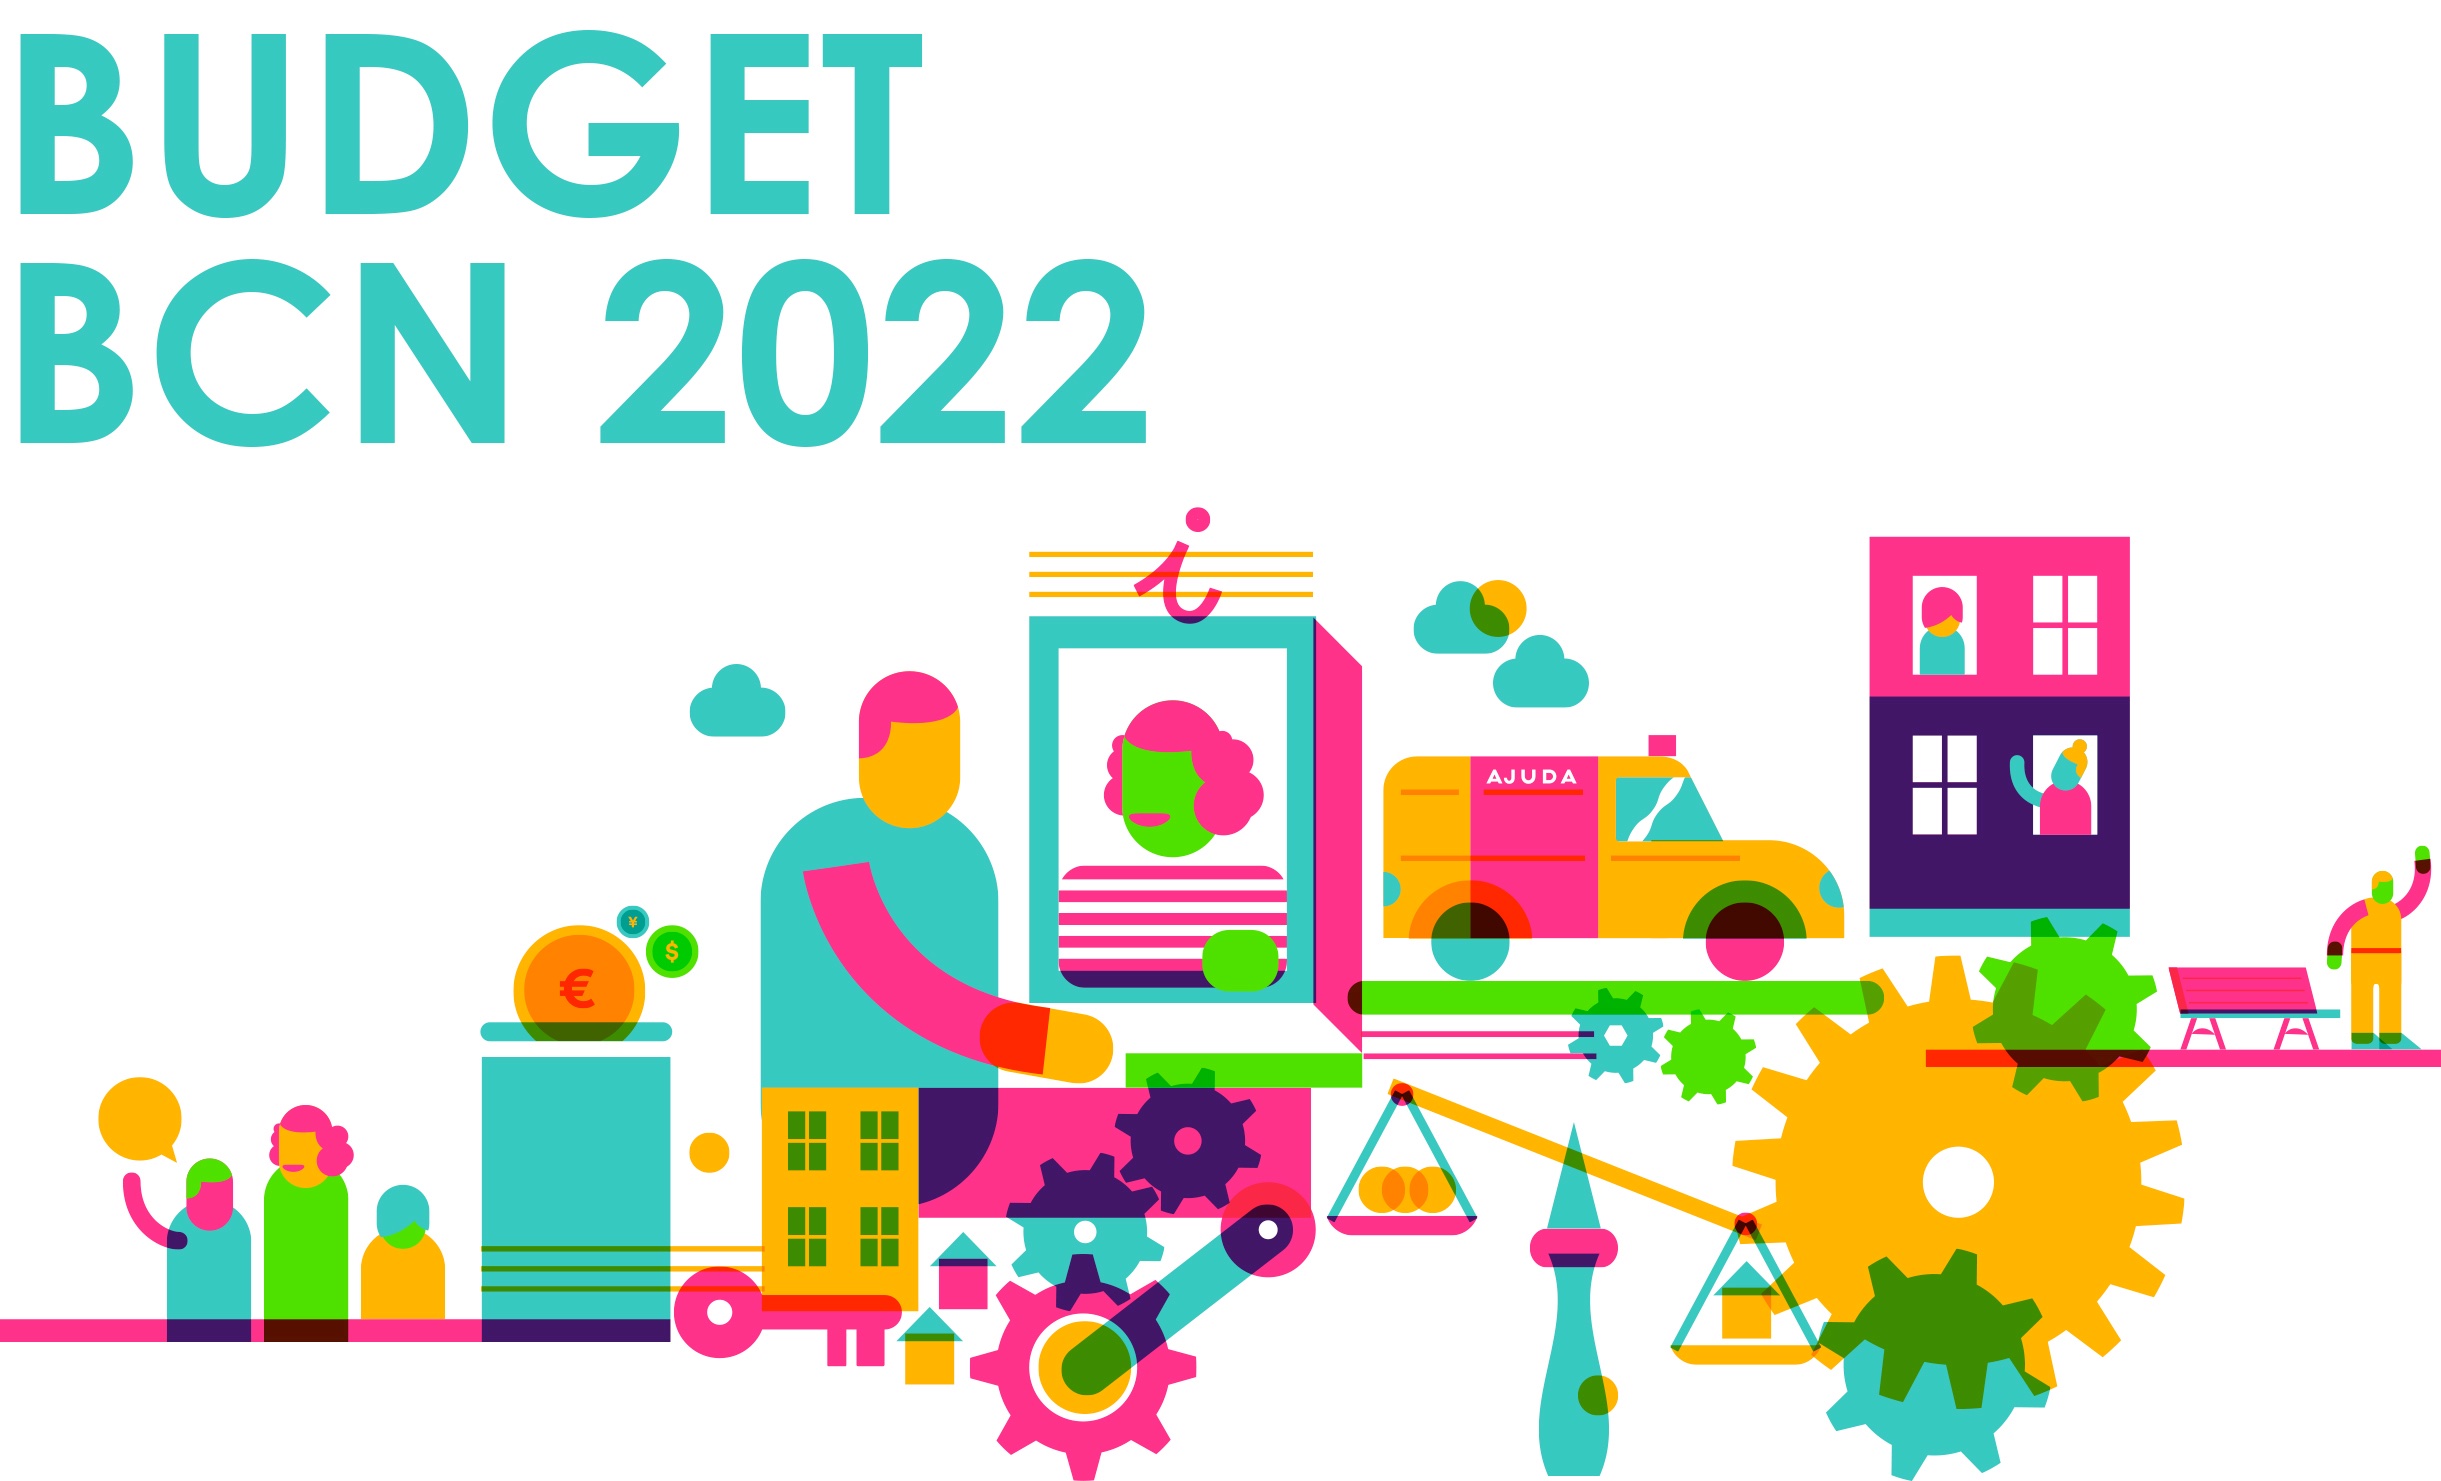 Budget BCN 2022